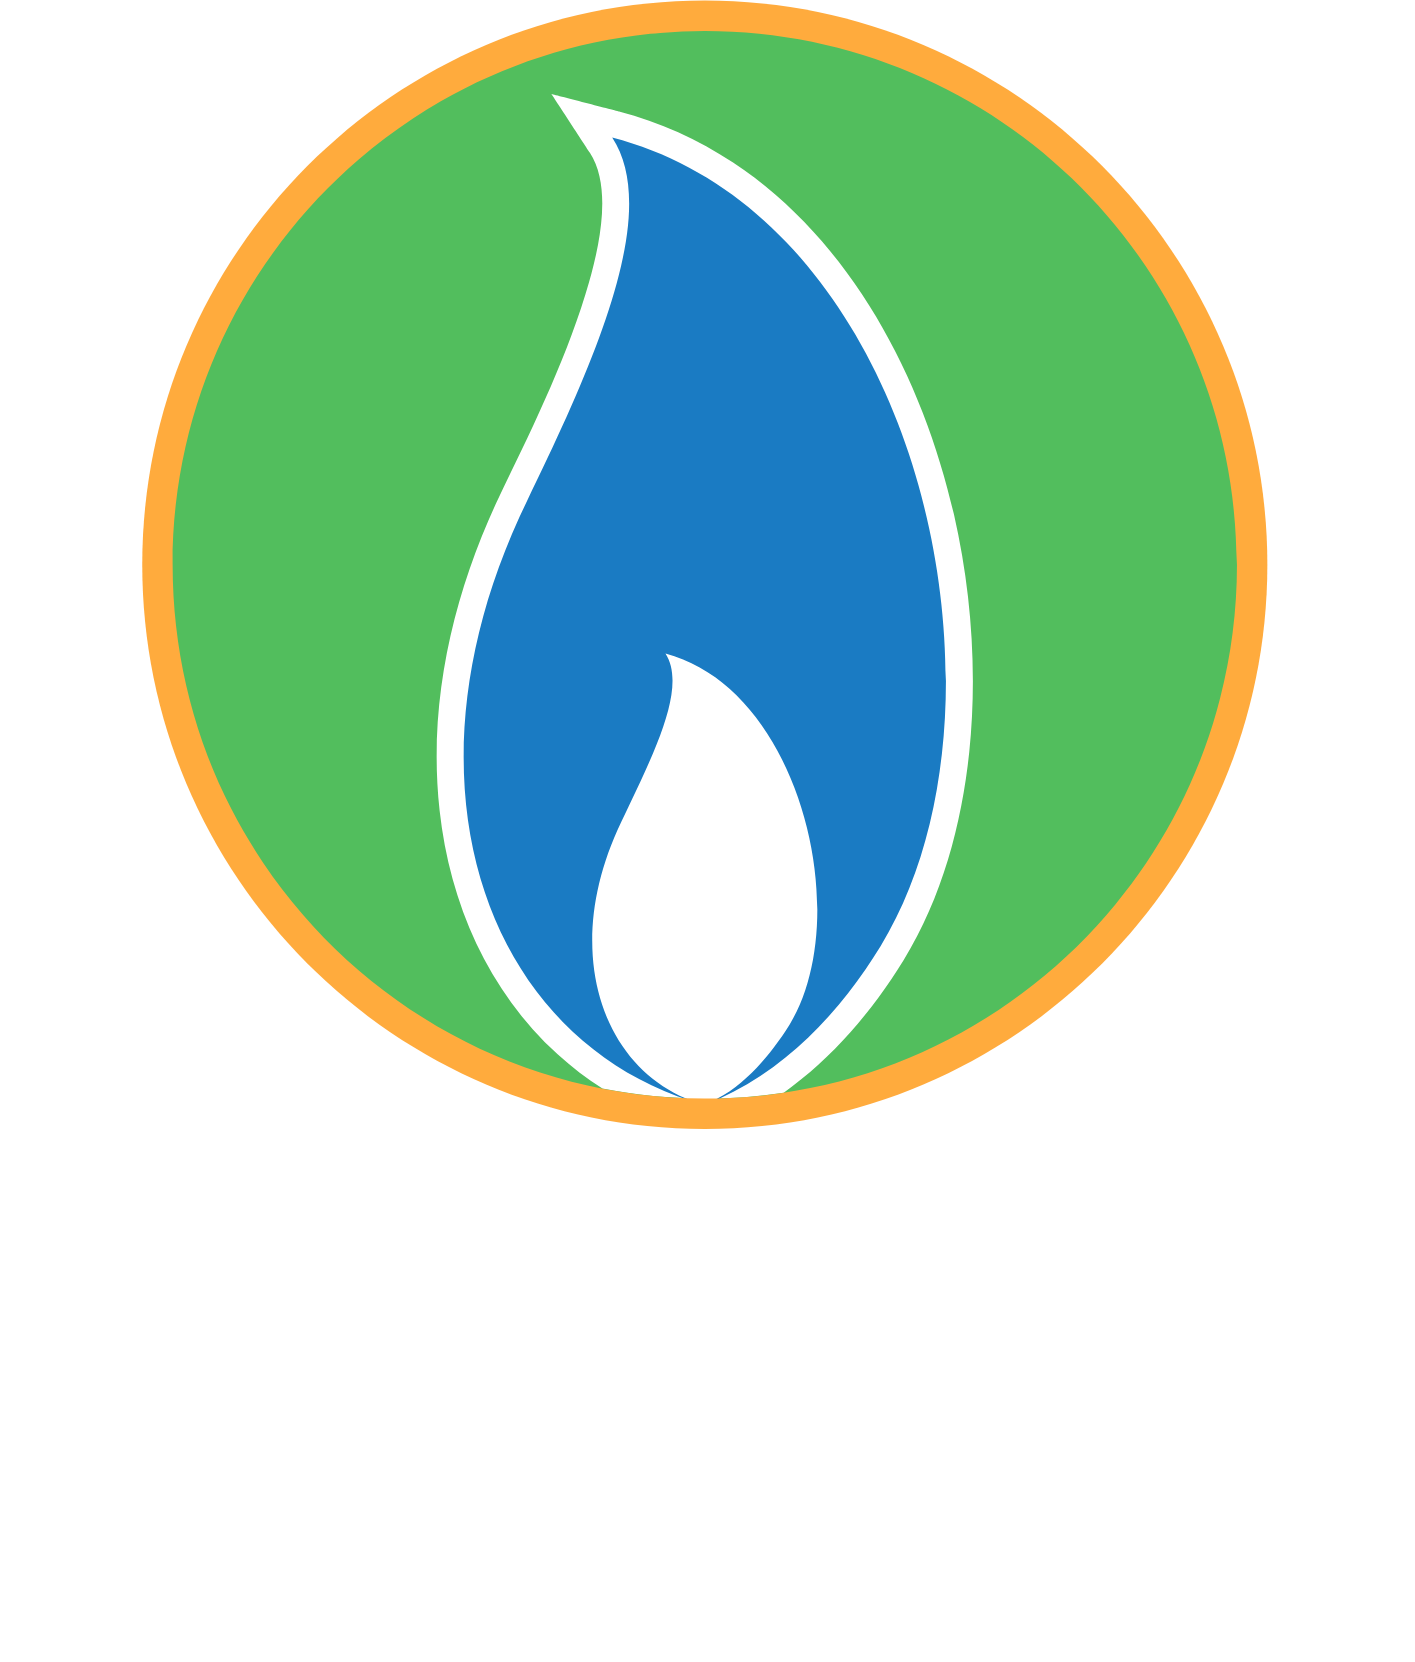 Mahanagar Gas logo grand pour les fonds sombres (PNG transparent)